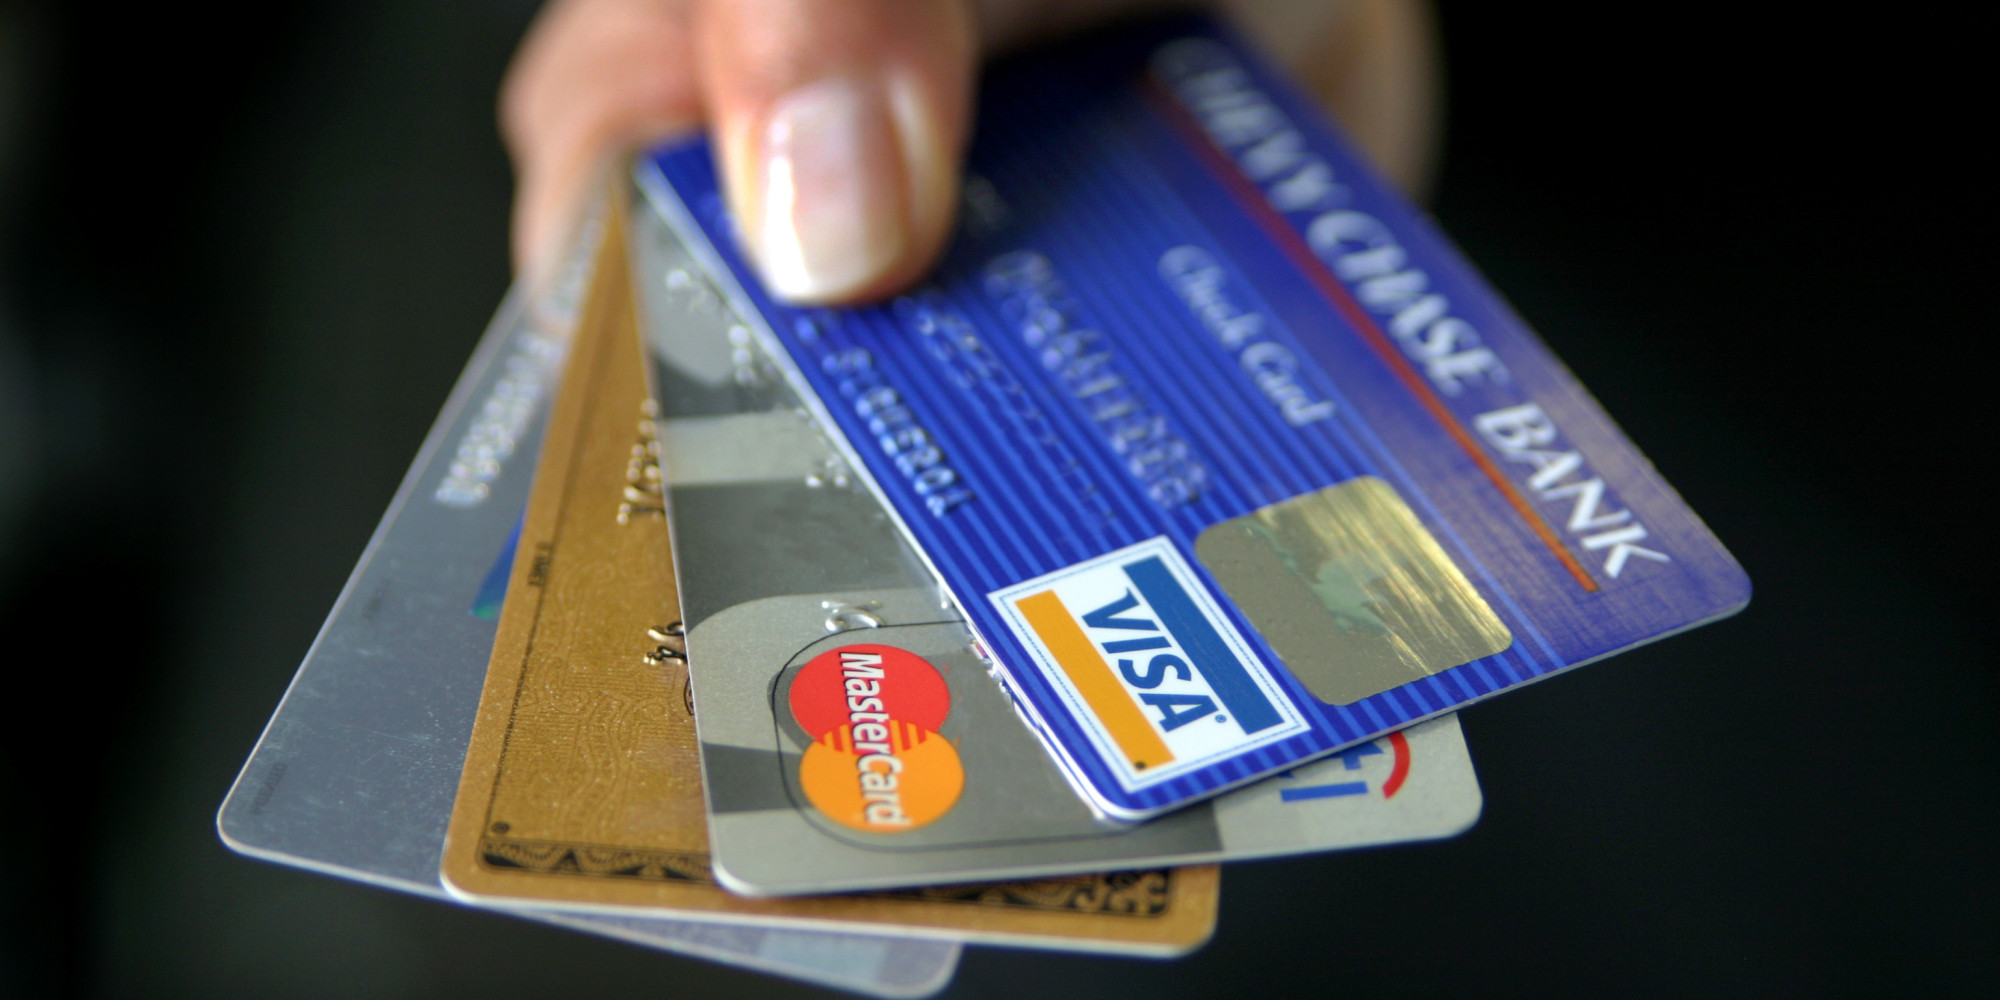 direct debit payment ach sbi credit card